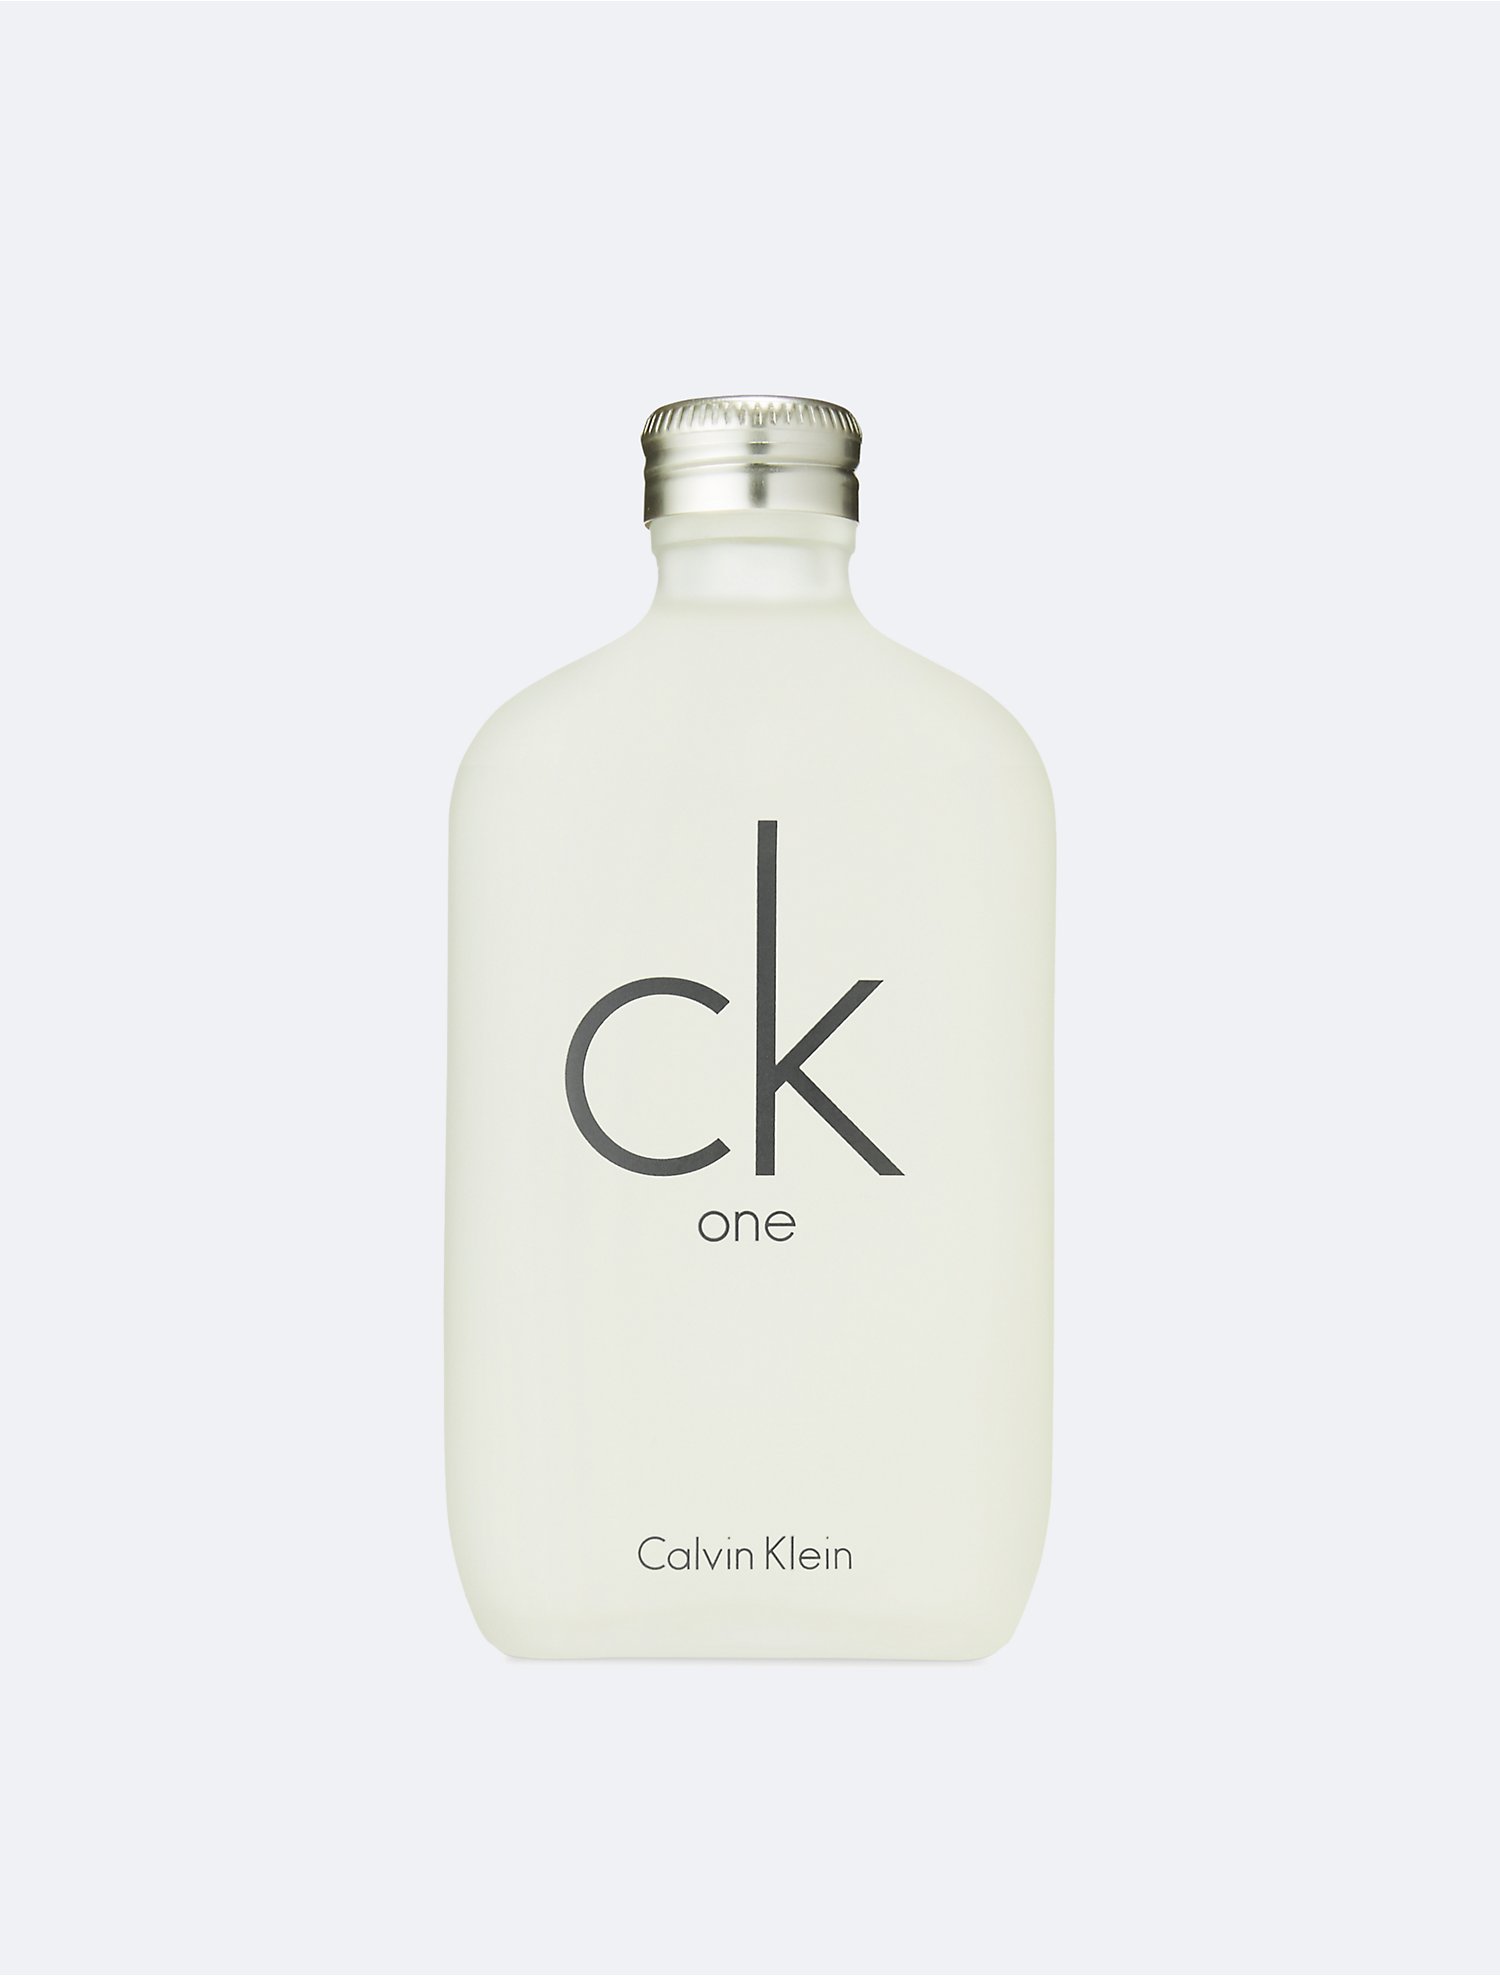 Actualizar 49+ imagen calvin klein perfume brands